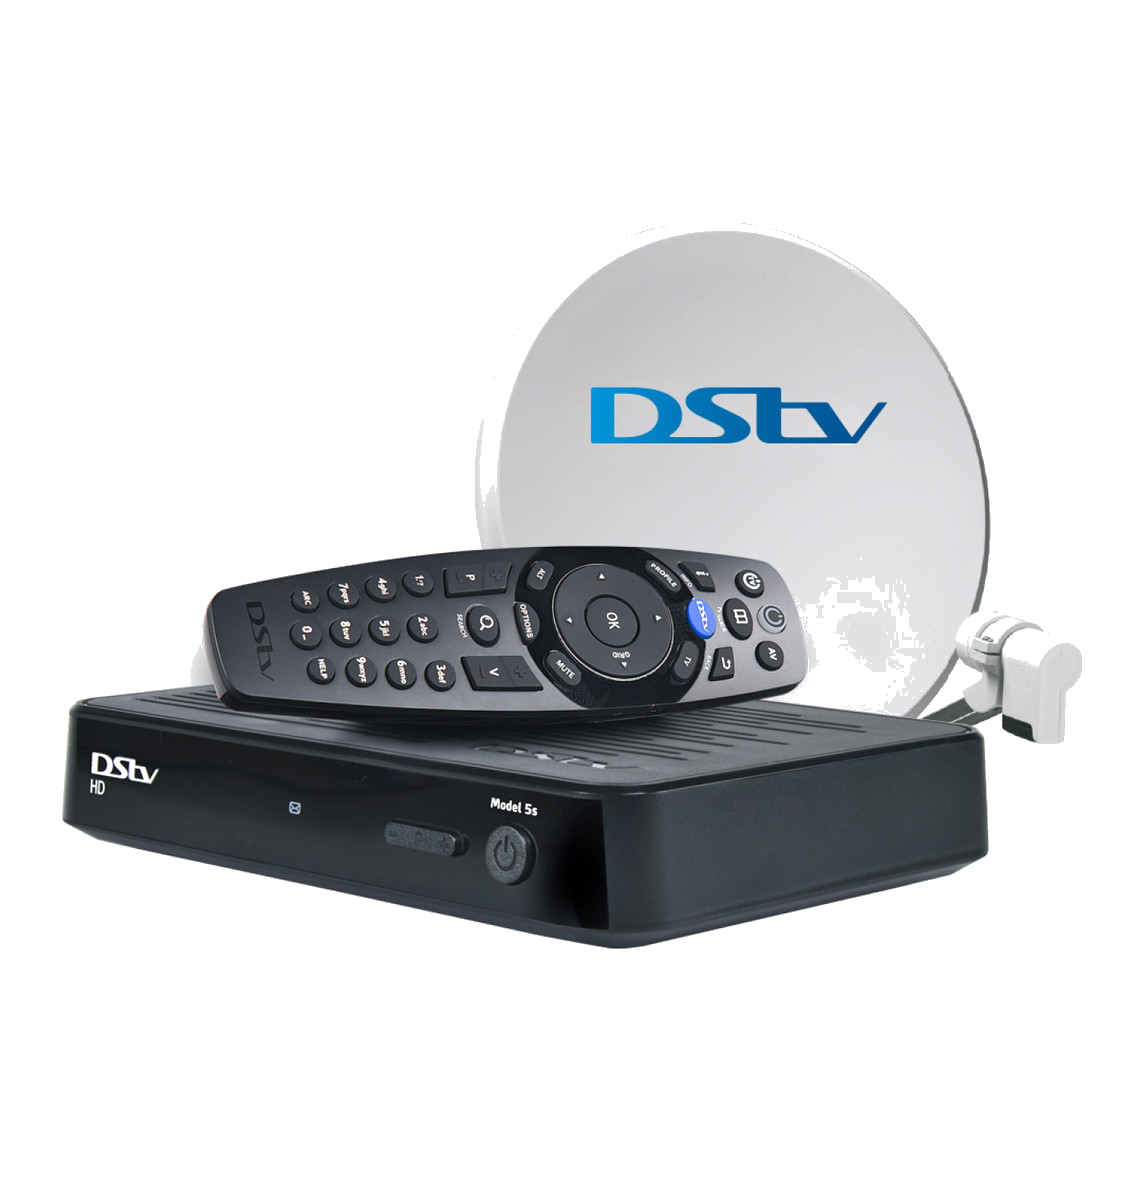 DSTV customer care